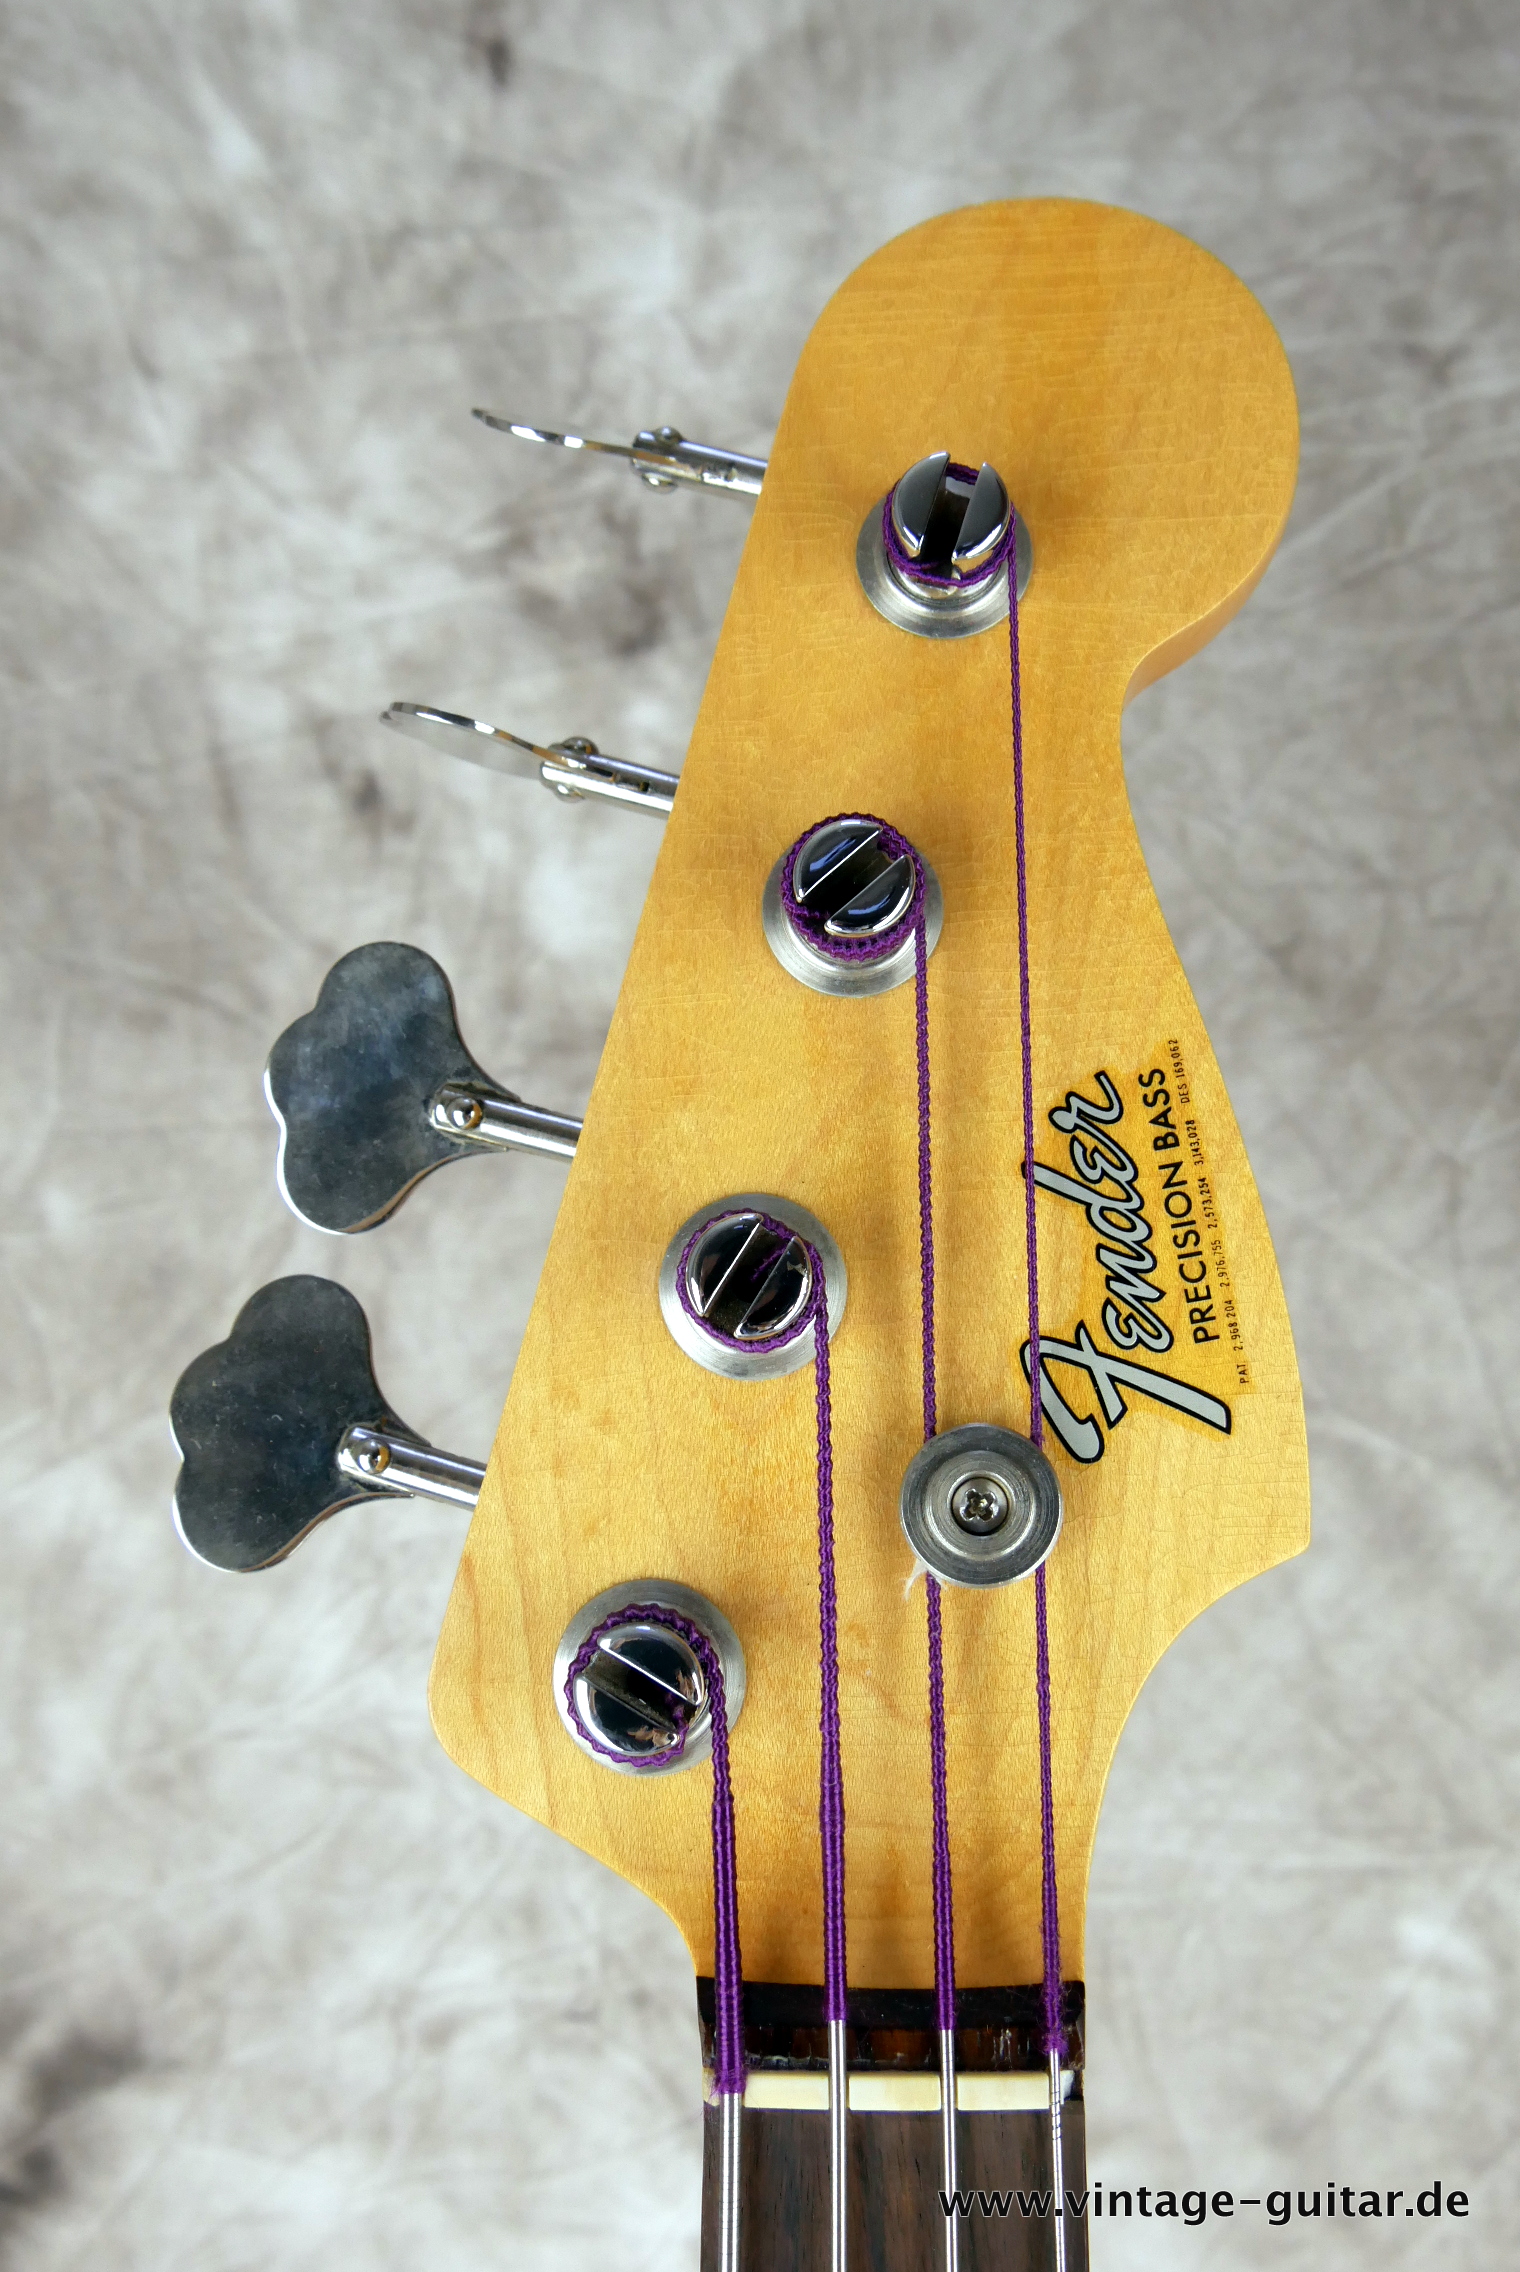 Fender-Precision-Bass-1965-sunburst-mint-condition-009.JPG